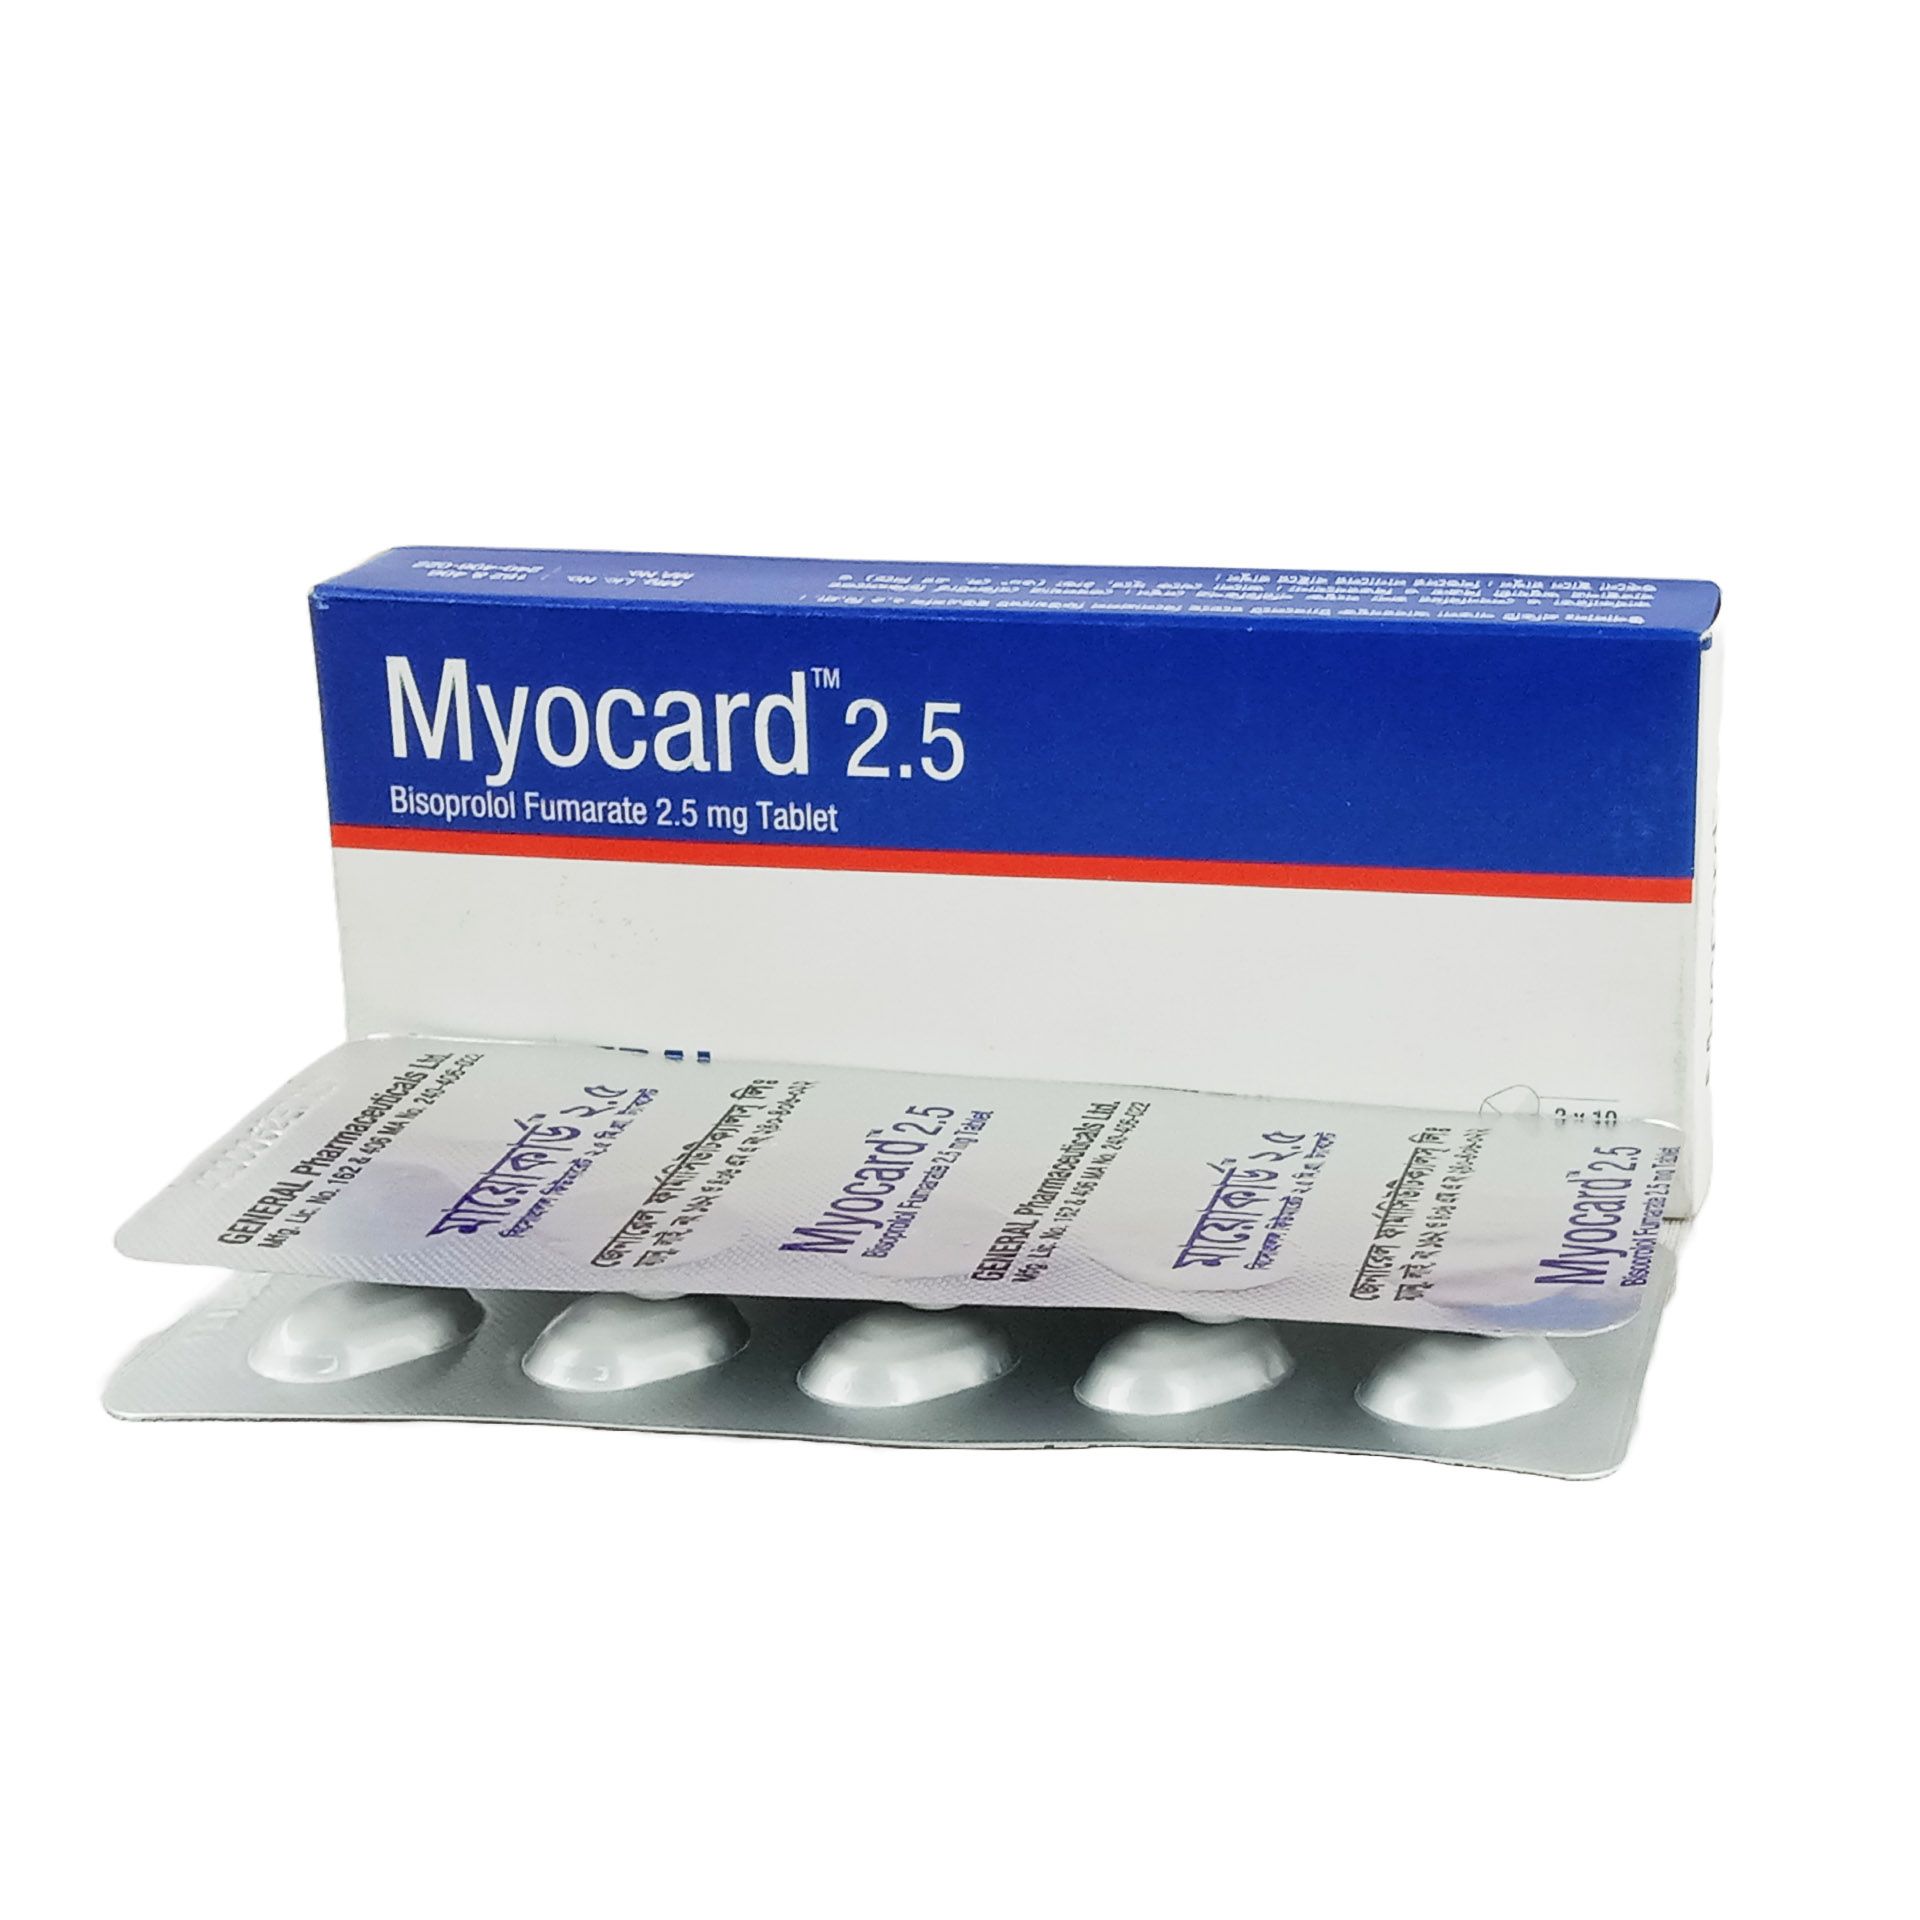 Myocard 2.5 2.5mg Tablet